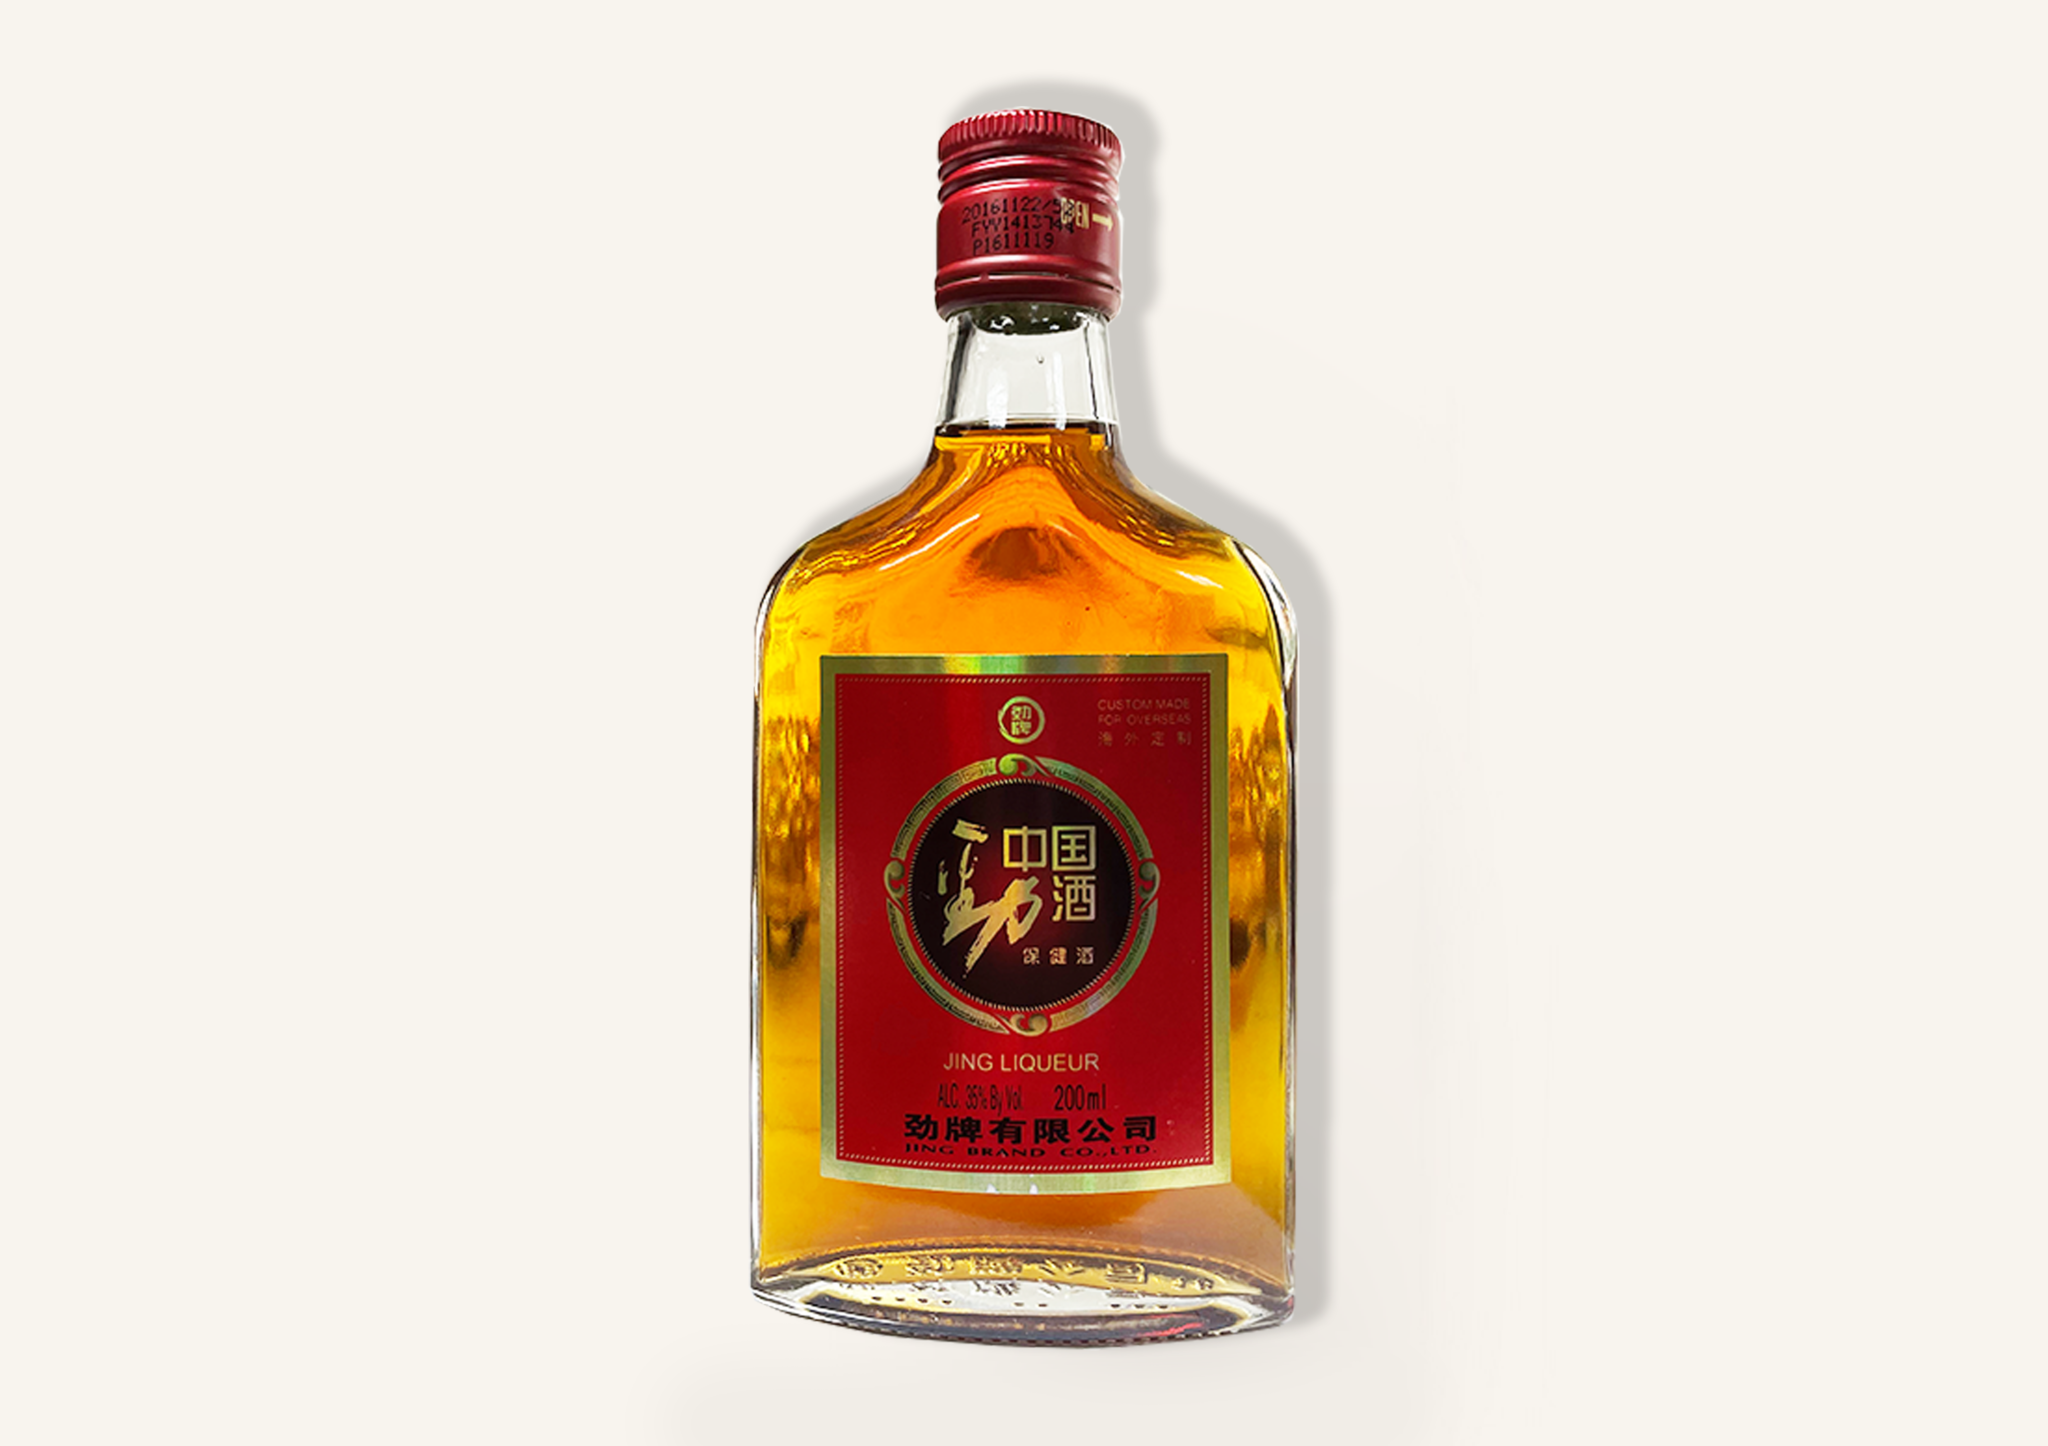 JingJiu 劲酒 200ml Chinese Whisky $6 批发价 Free Delivery